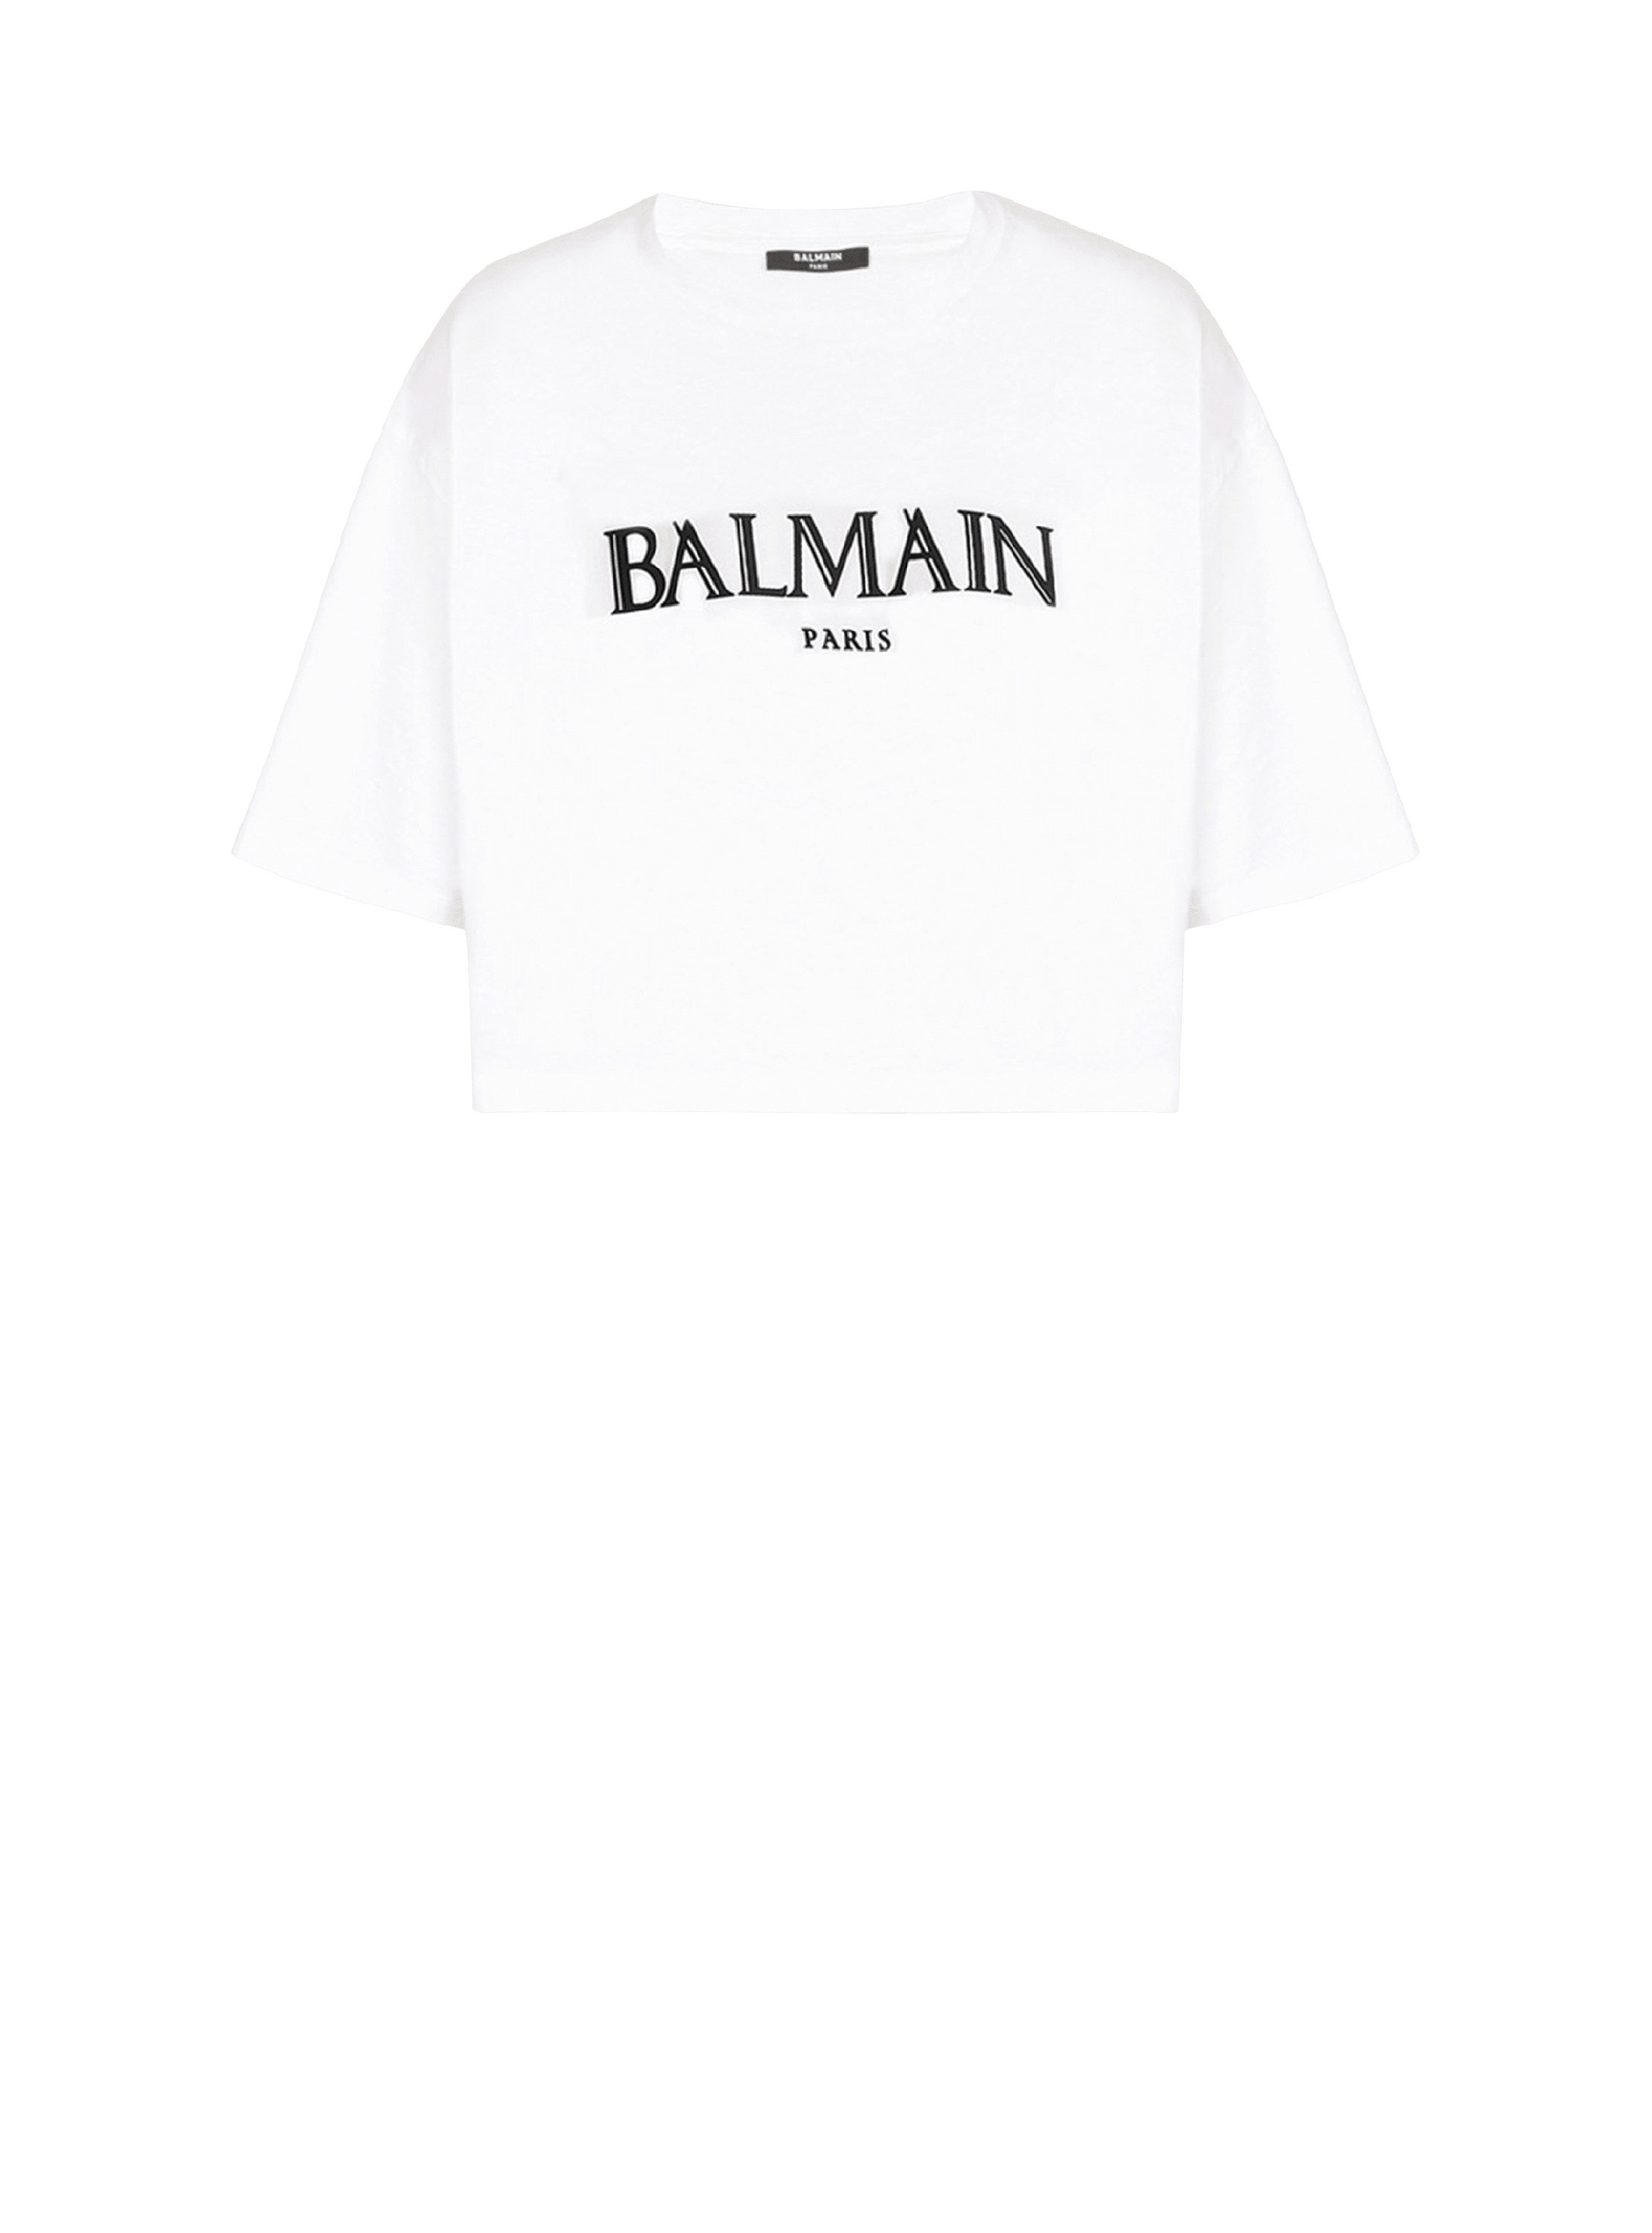 T-shirt corta con logo Balmain romano in caucciù, bianco, hi-res